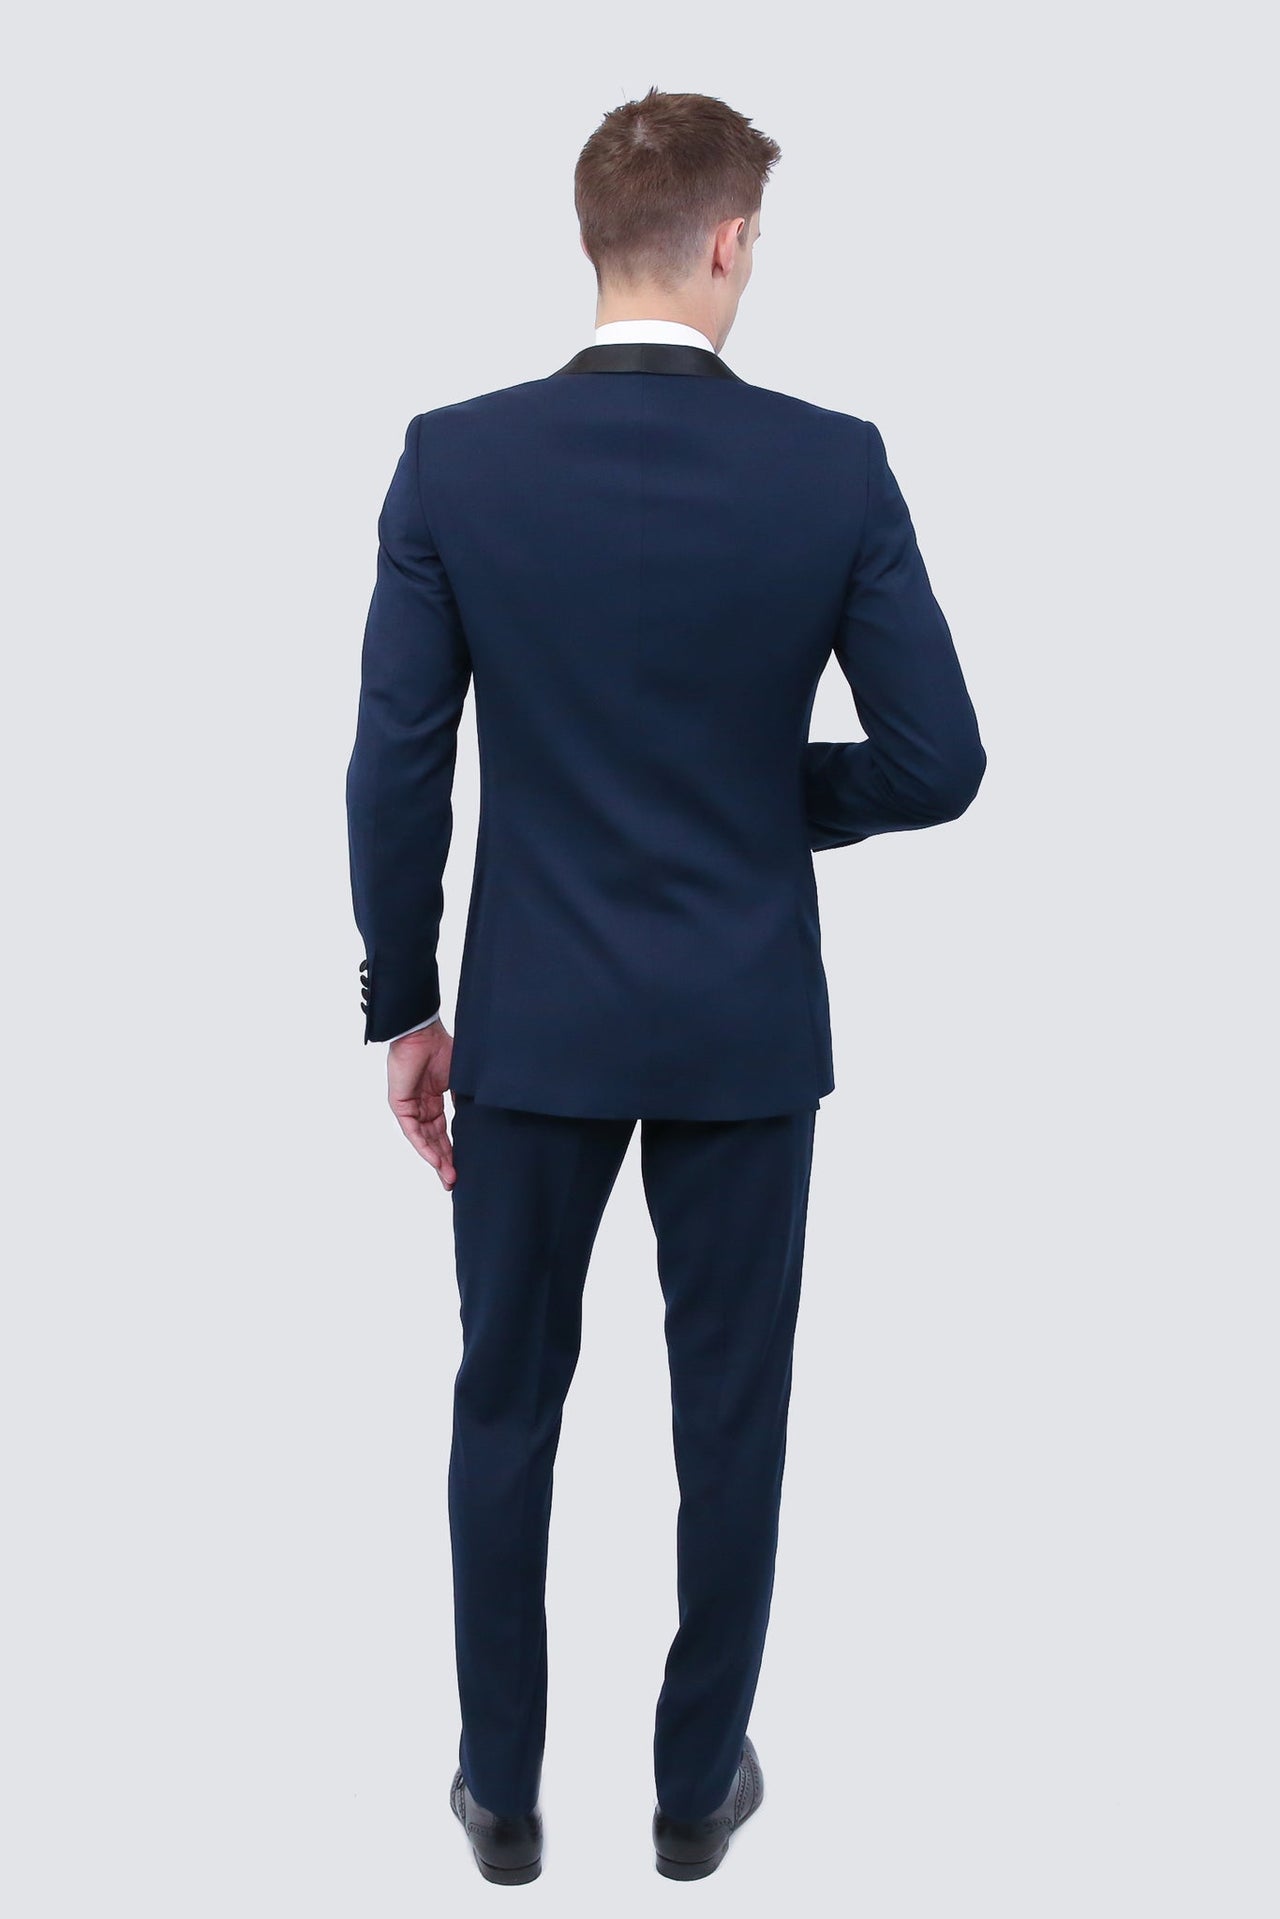 Tailor's Stretch Blend Navy Blue Tuxedo | Modern or Slim Fit - Tomasso Black